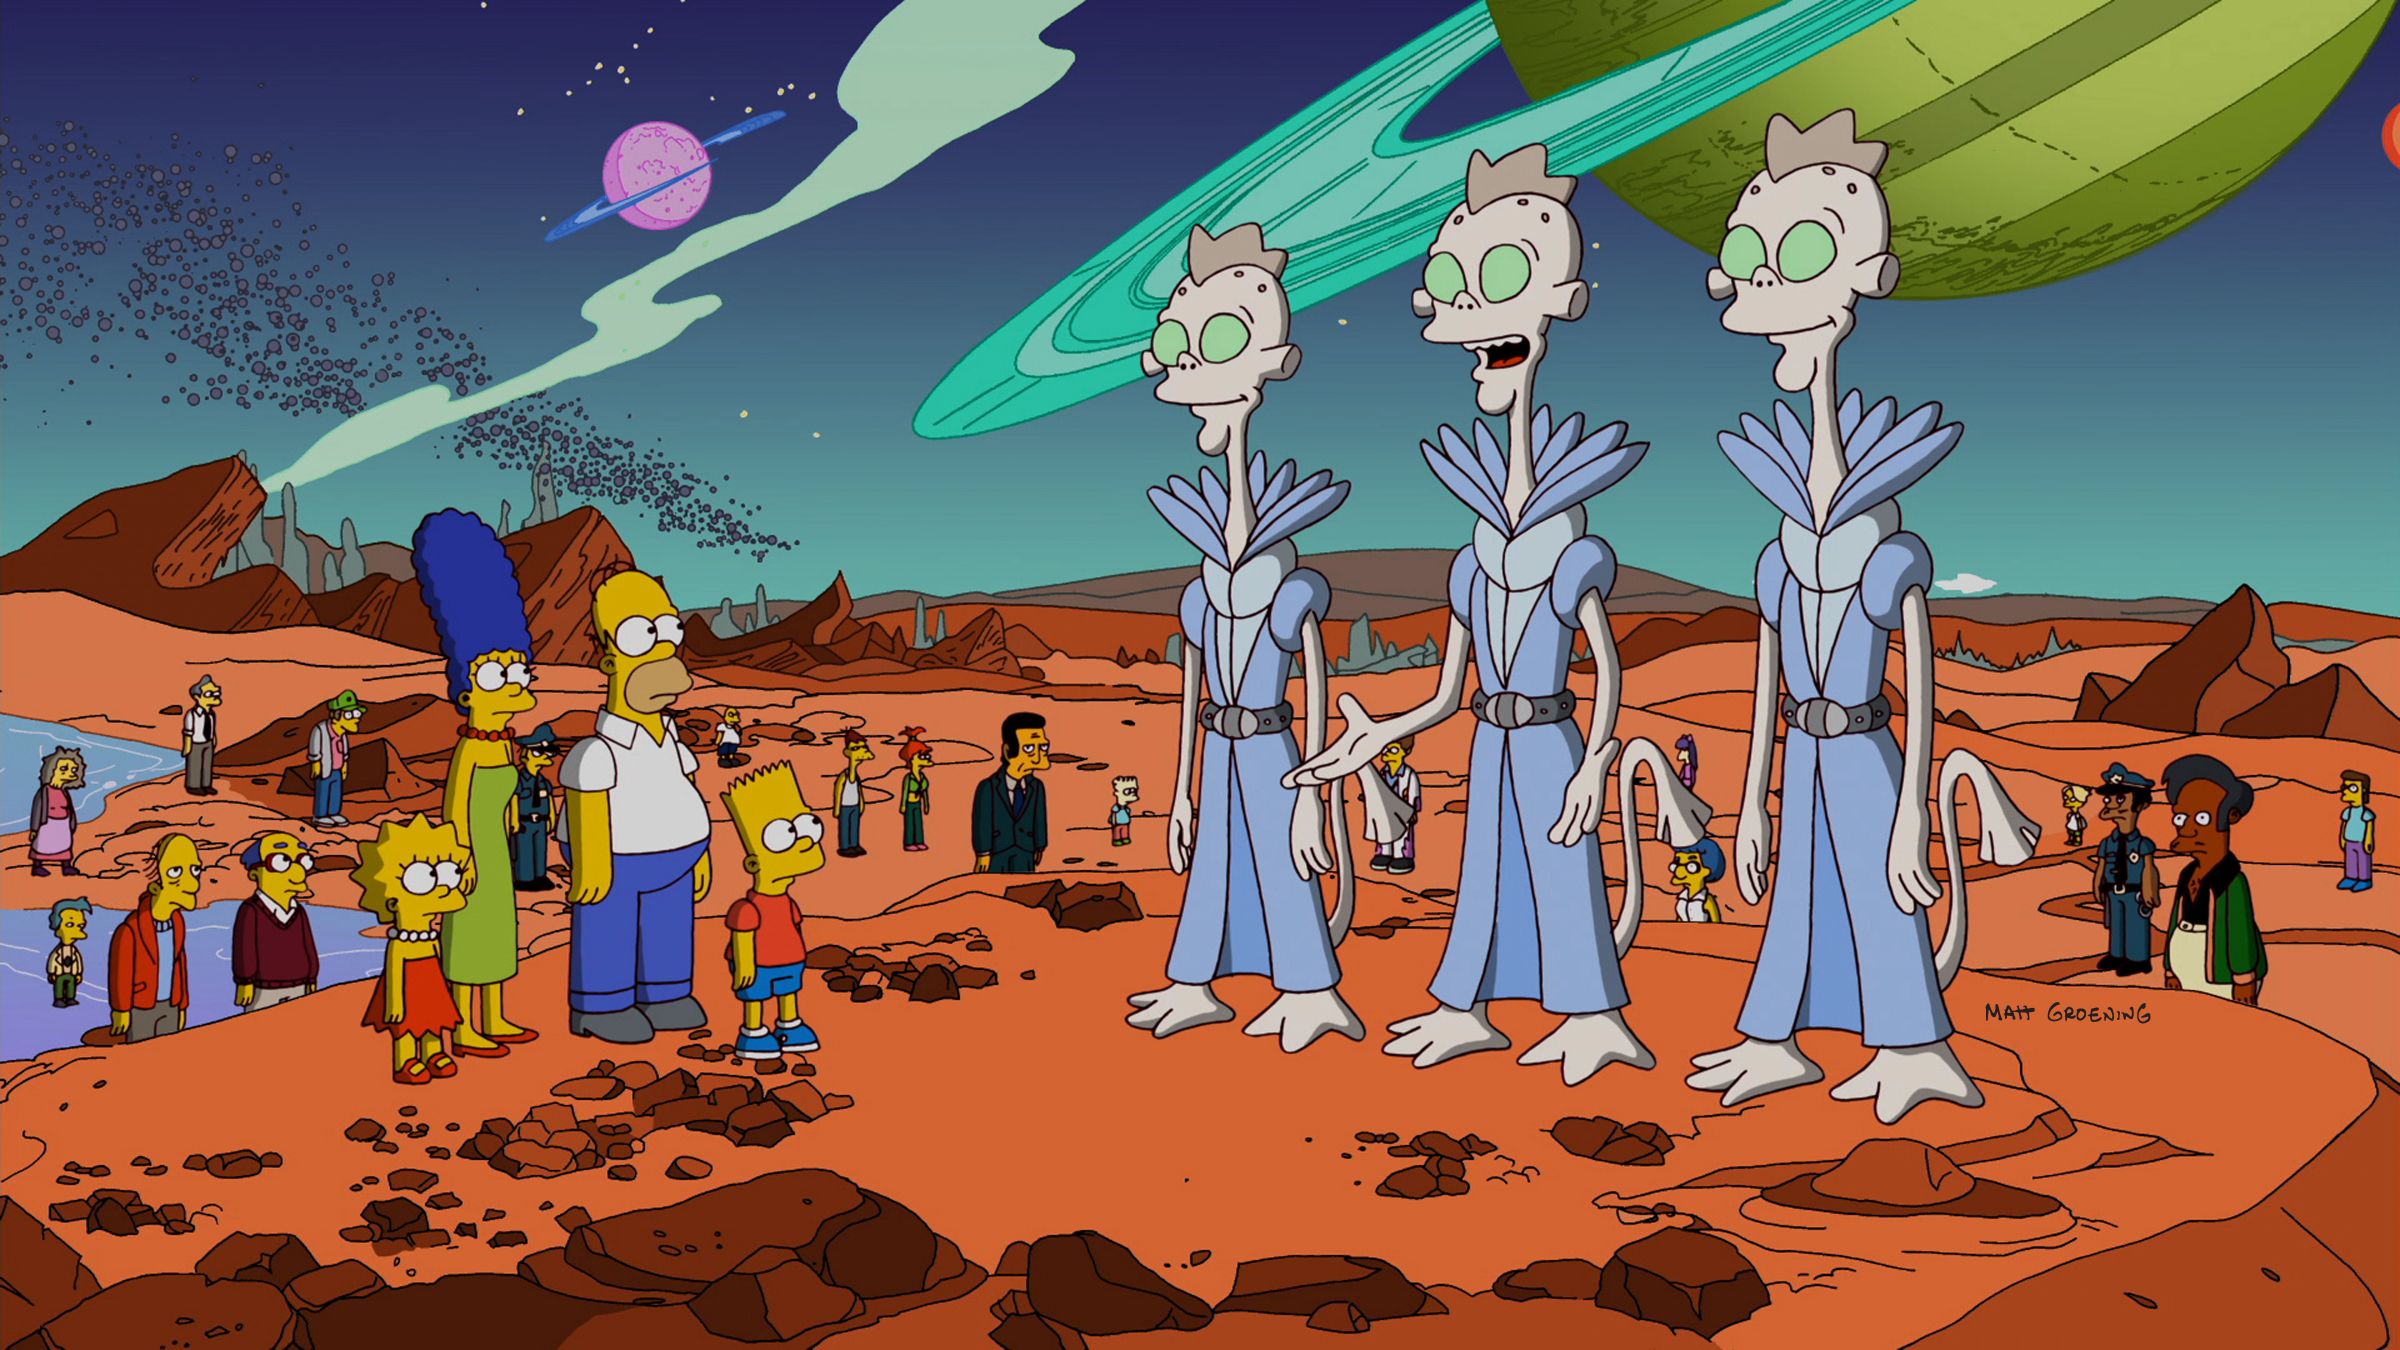 The Simpsons Halloween Episode - Treehouse of Horror XXIII #2